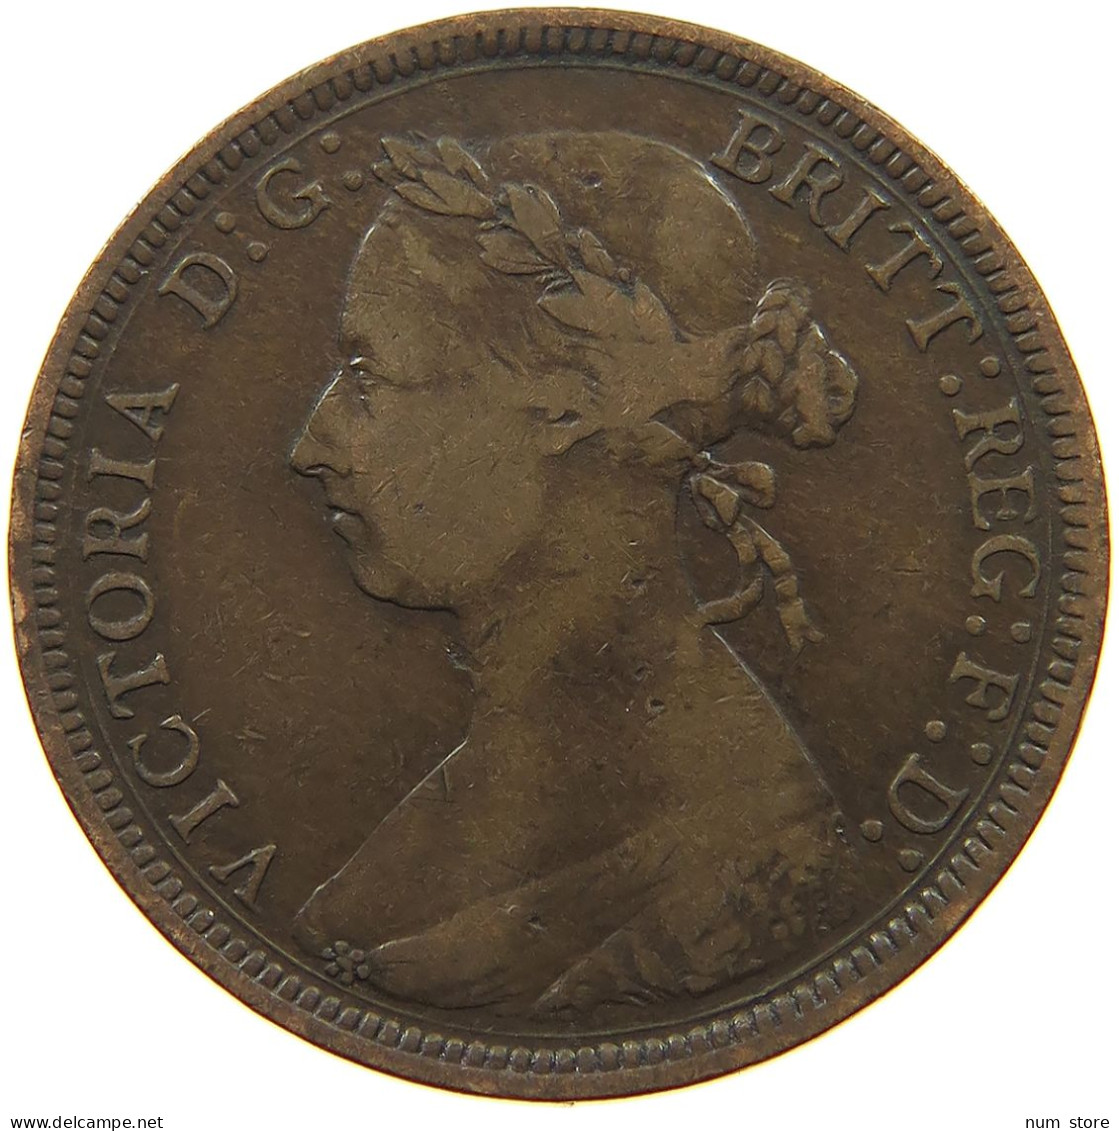 GREAT BRITAIN HALFPENNY 1887 Victoria 1837-1901 #s077 0403 - C. 1/2 Penny